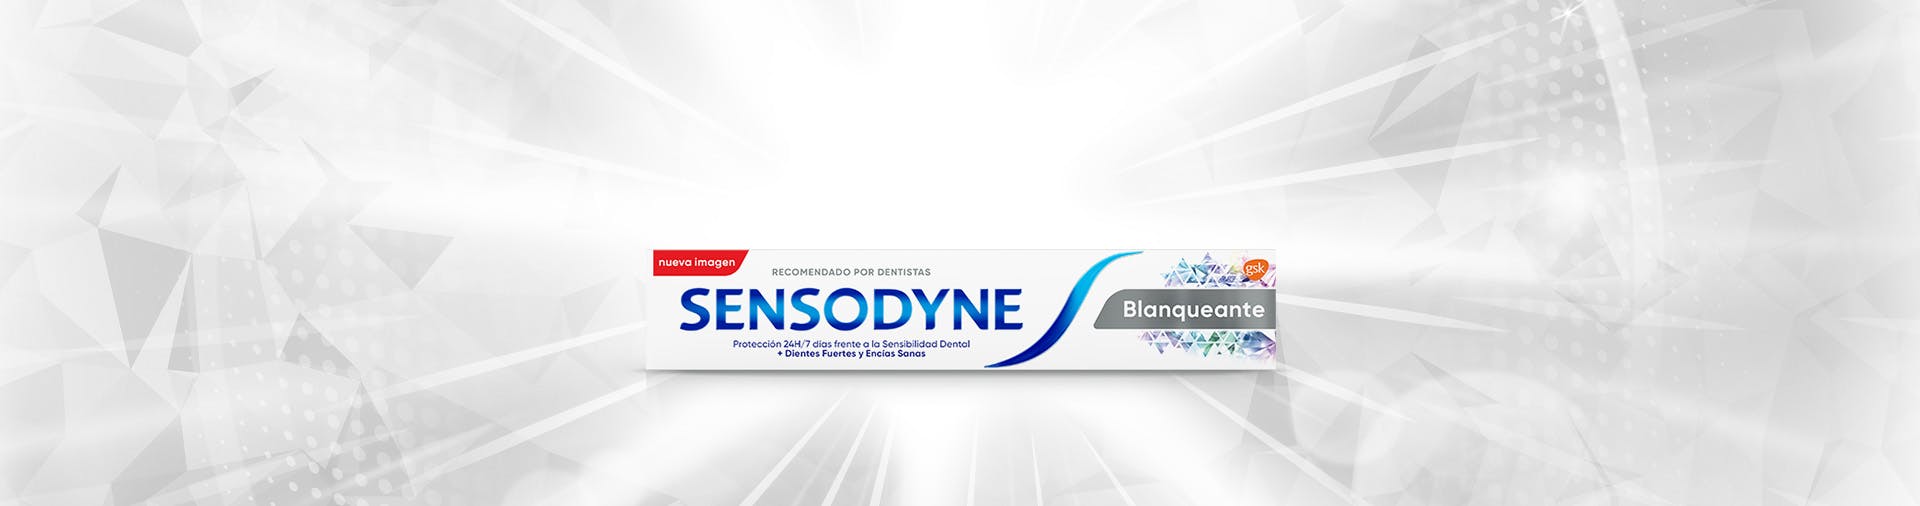 Sensodyne Blanqueamiento suave - Sensodyne ES